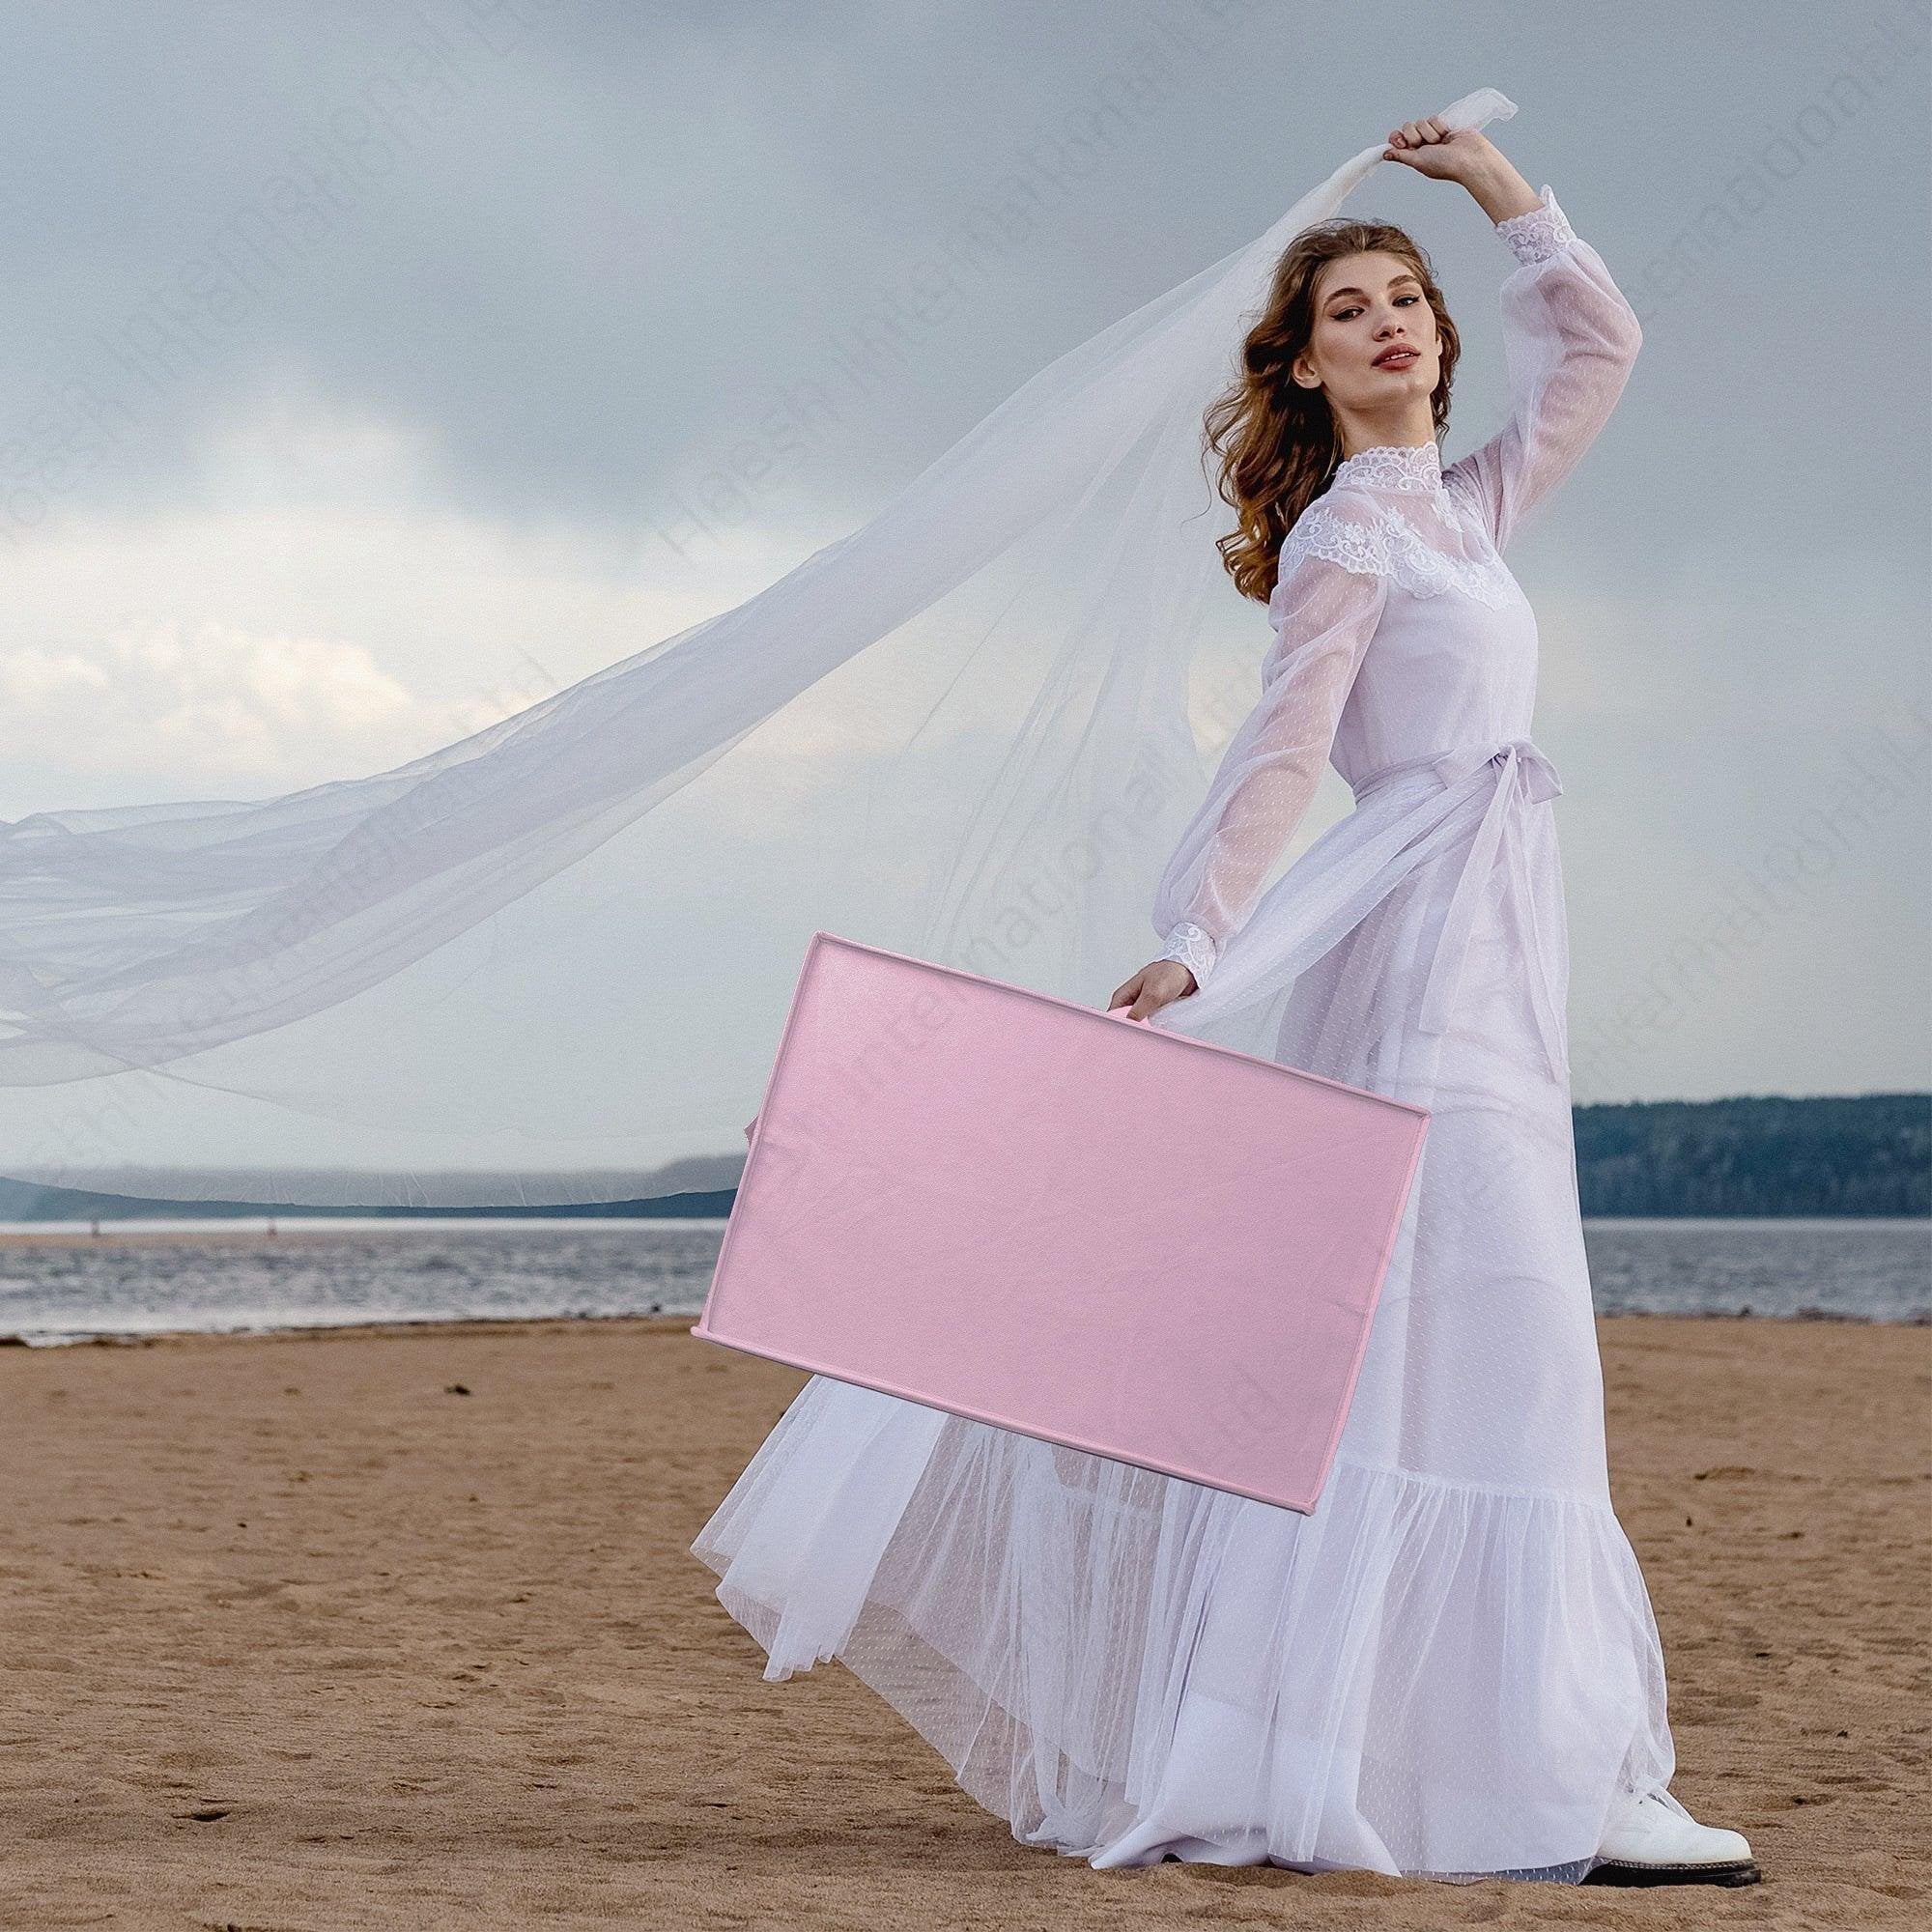 Wedding Dress Travel Storage Boxes - Hoesh International Ltd